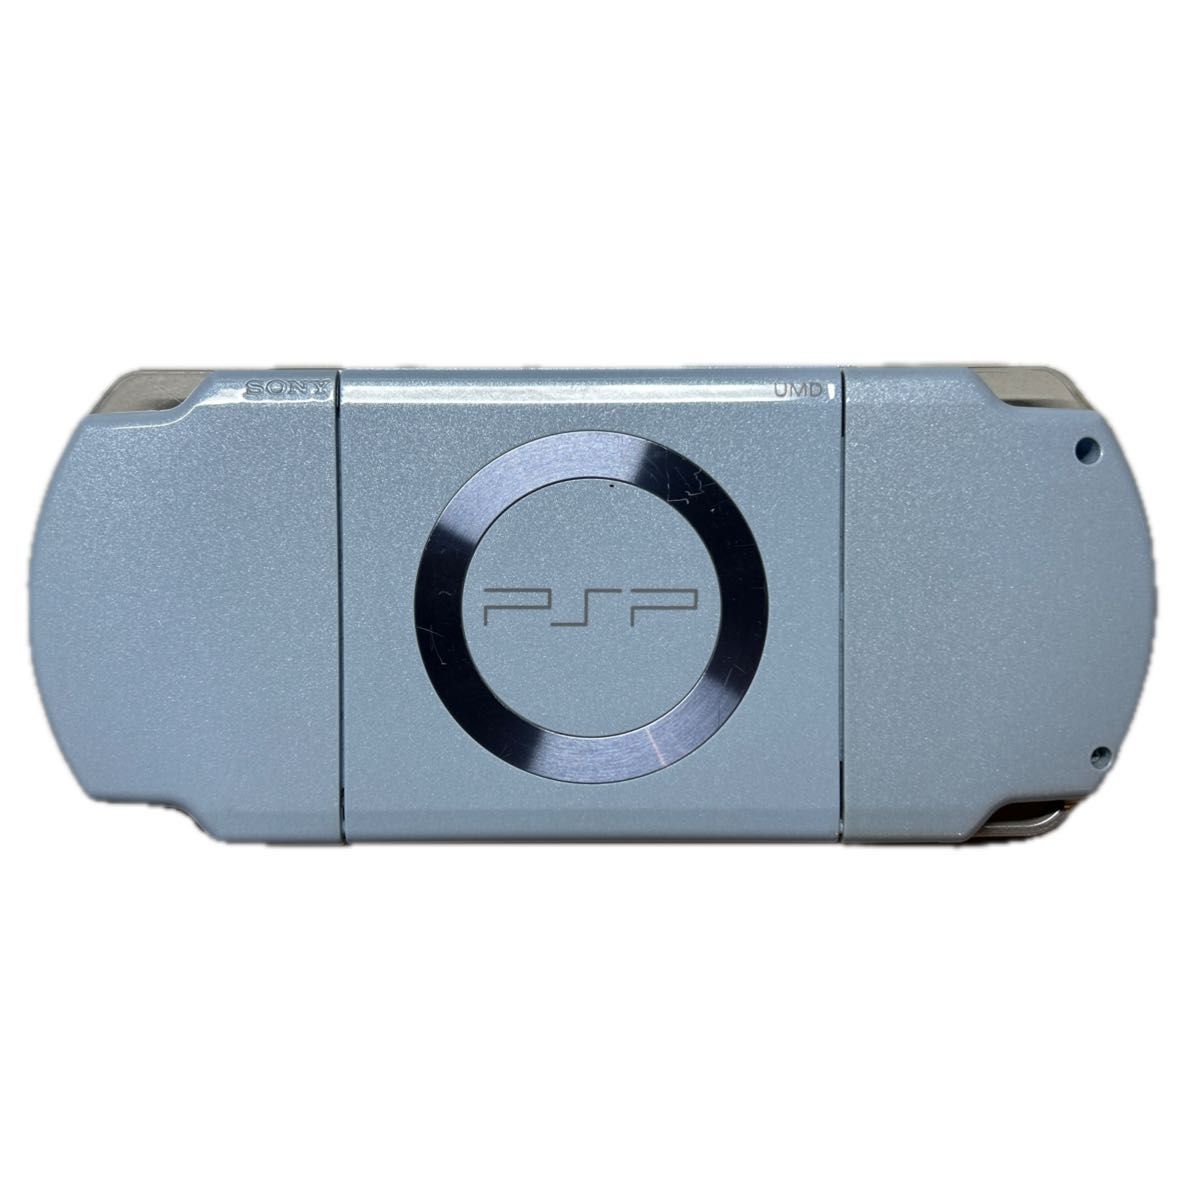 PSP-2000 ブルー メモリースティック4G USB充電ケーブル 保護ケース モンハン付